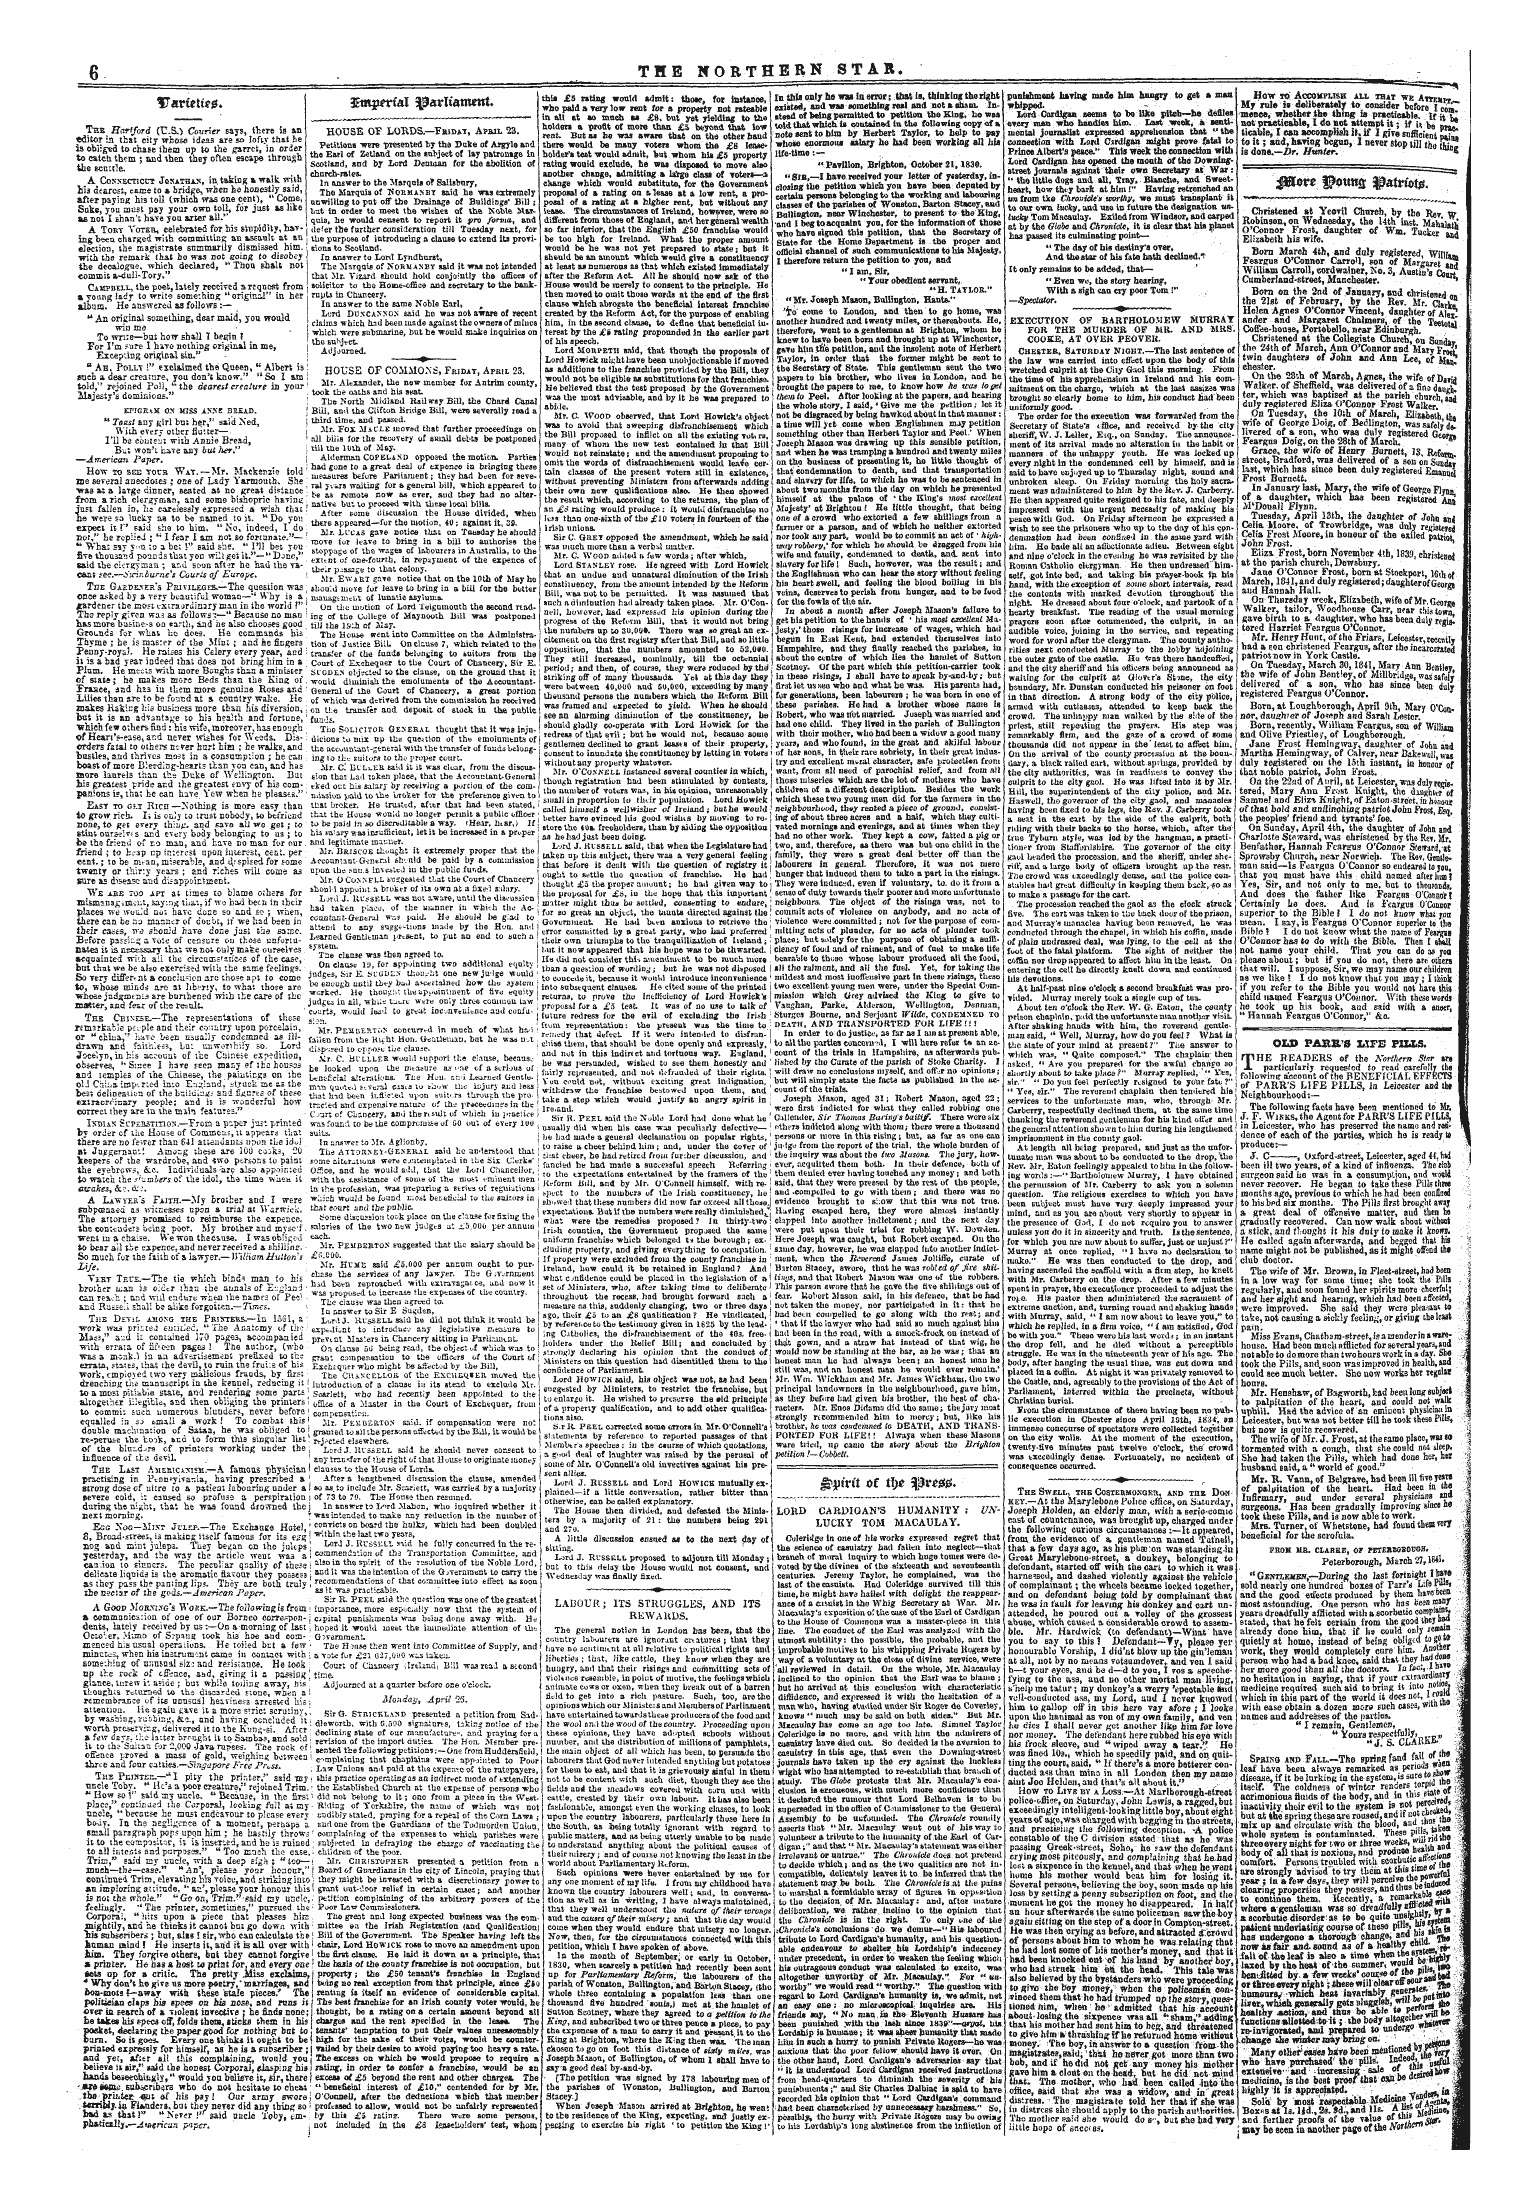 Northern Star (1837-1852): jS F Y, 3rd edition - Movt ^Una $Atrtote